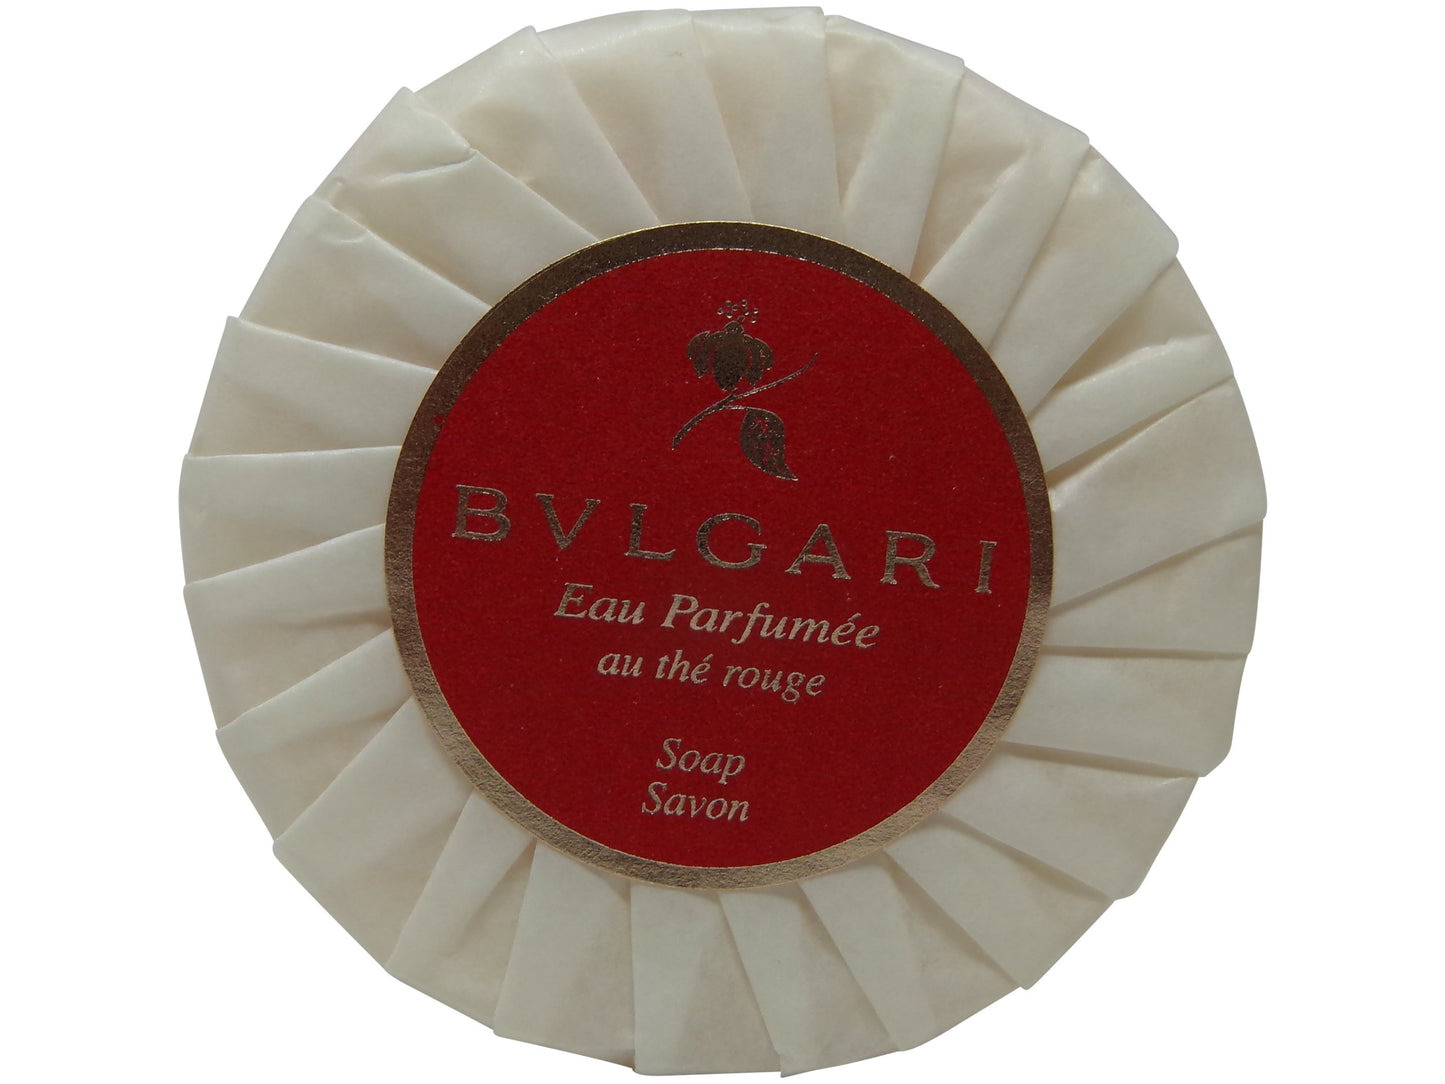 Bvlgari Eau Parfumee Au the Rouge Soap, 150 gm/5.3 oz